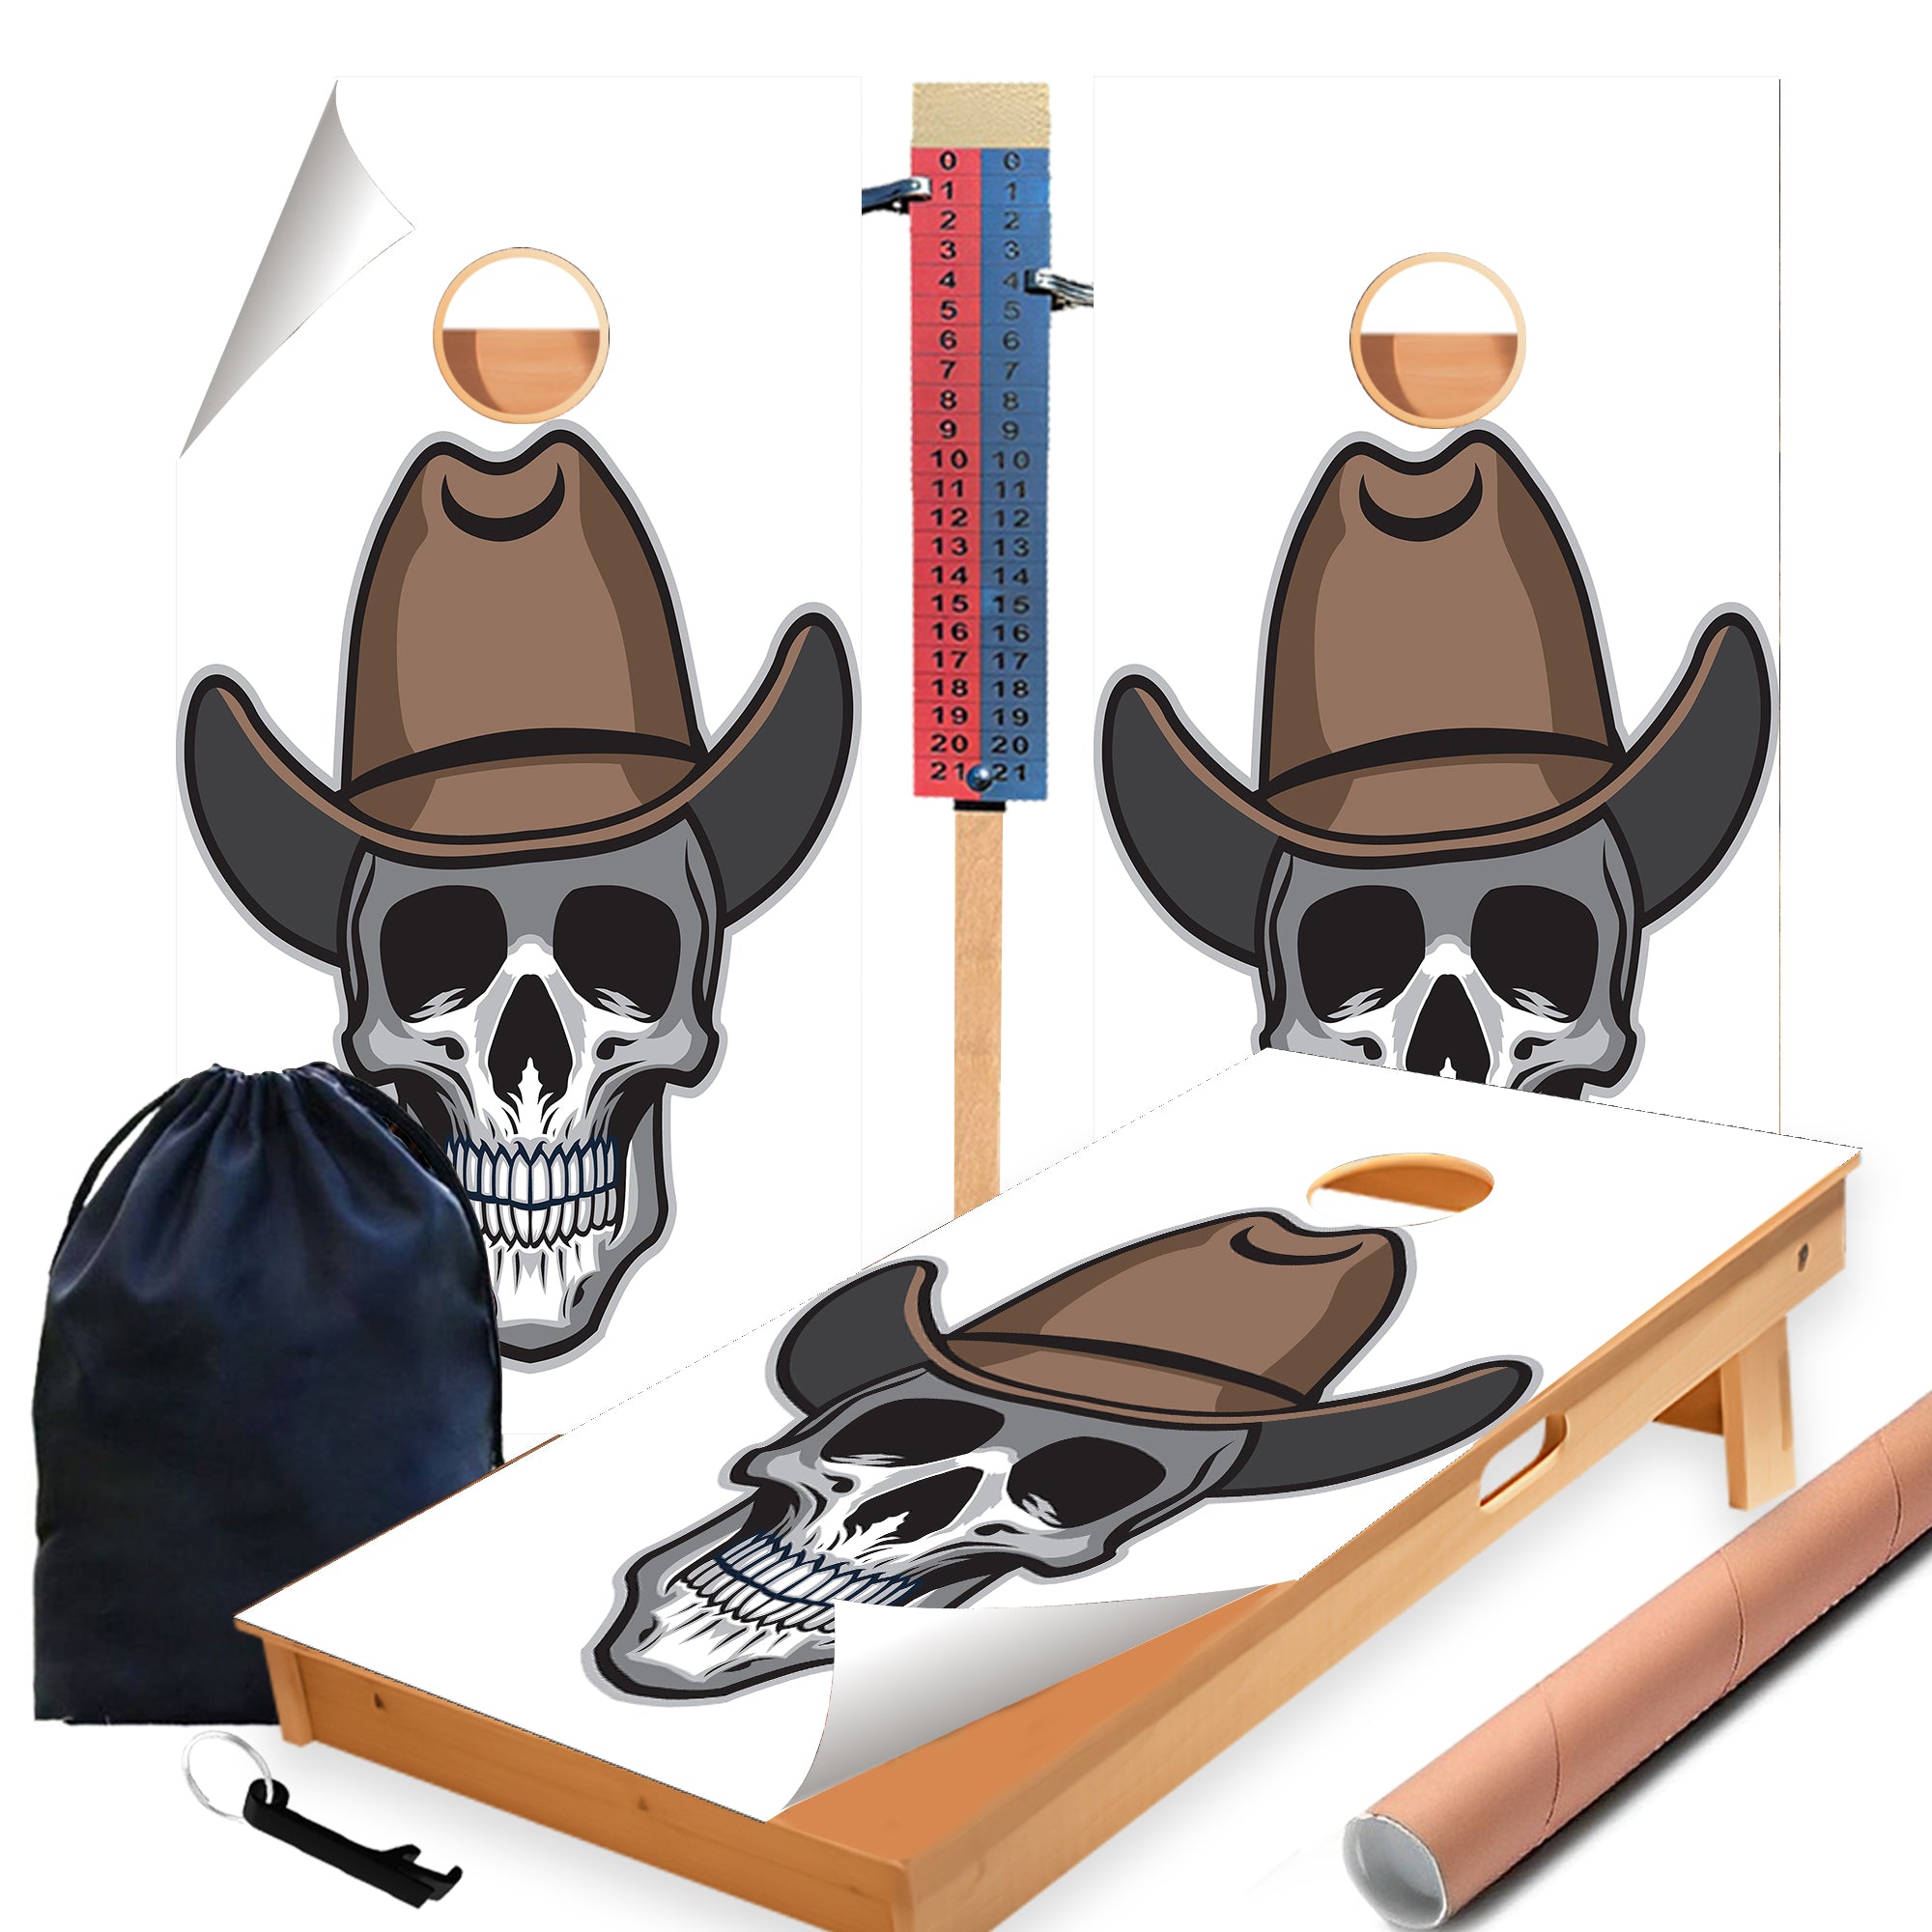 Cowboy Skull Cornhole Boards Wraps (Set of 2)